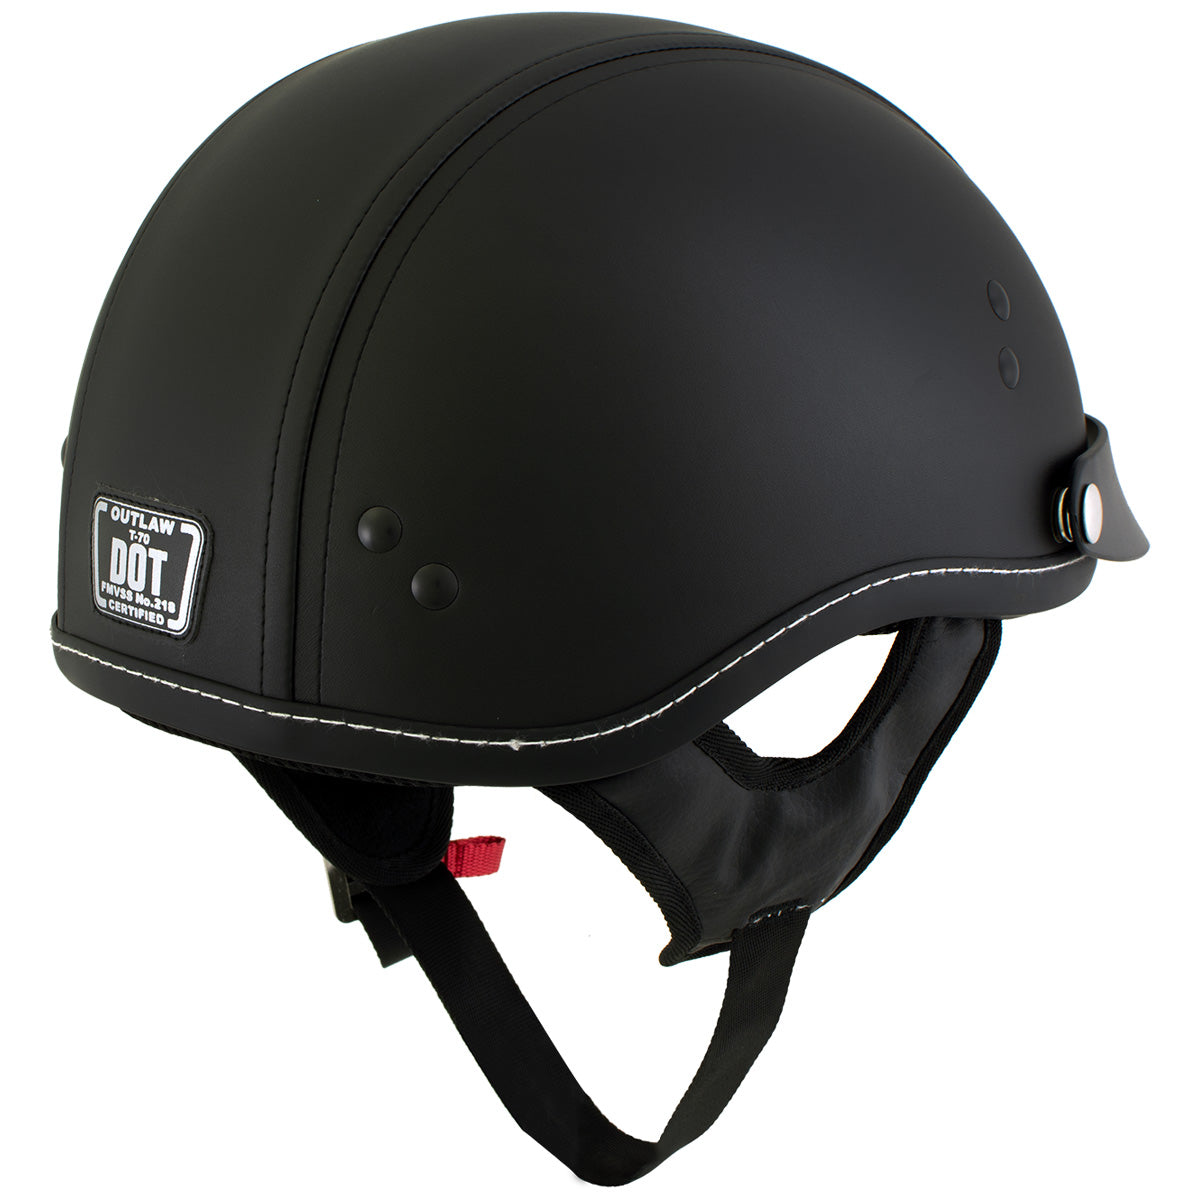 Outlaw T70 'Dark Rider' Advance DOT Black Leather Like Half Helmet with Snap Visor